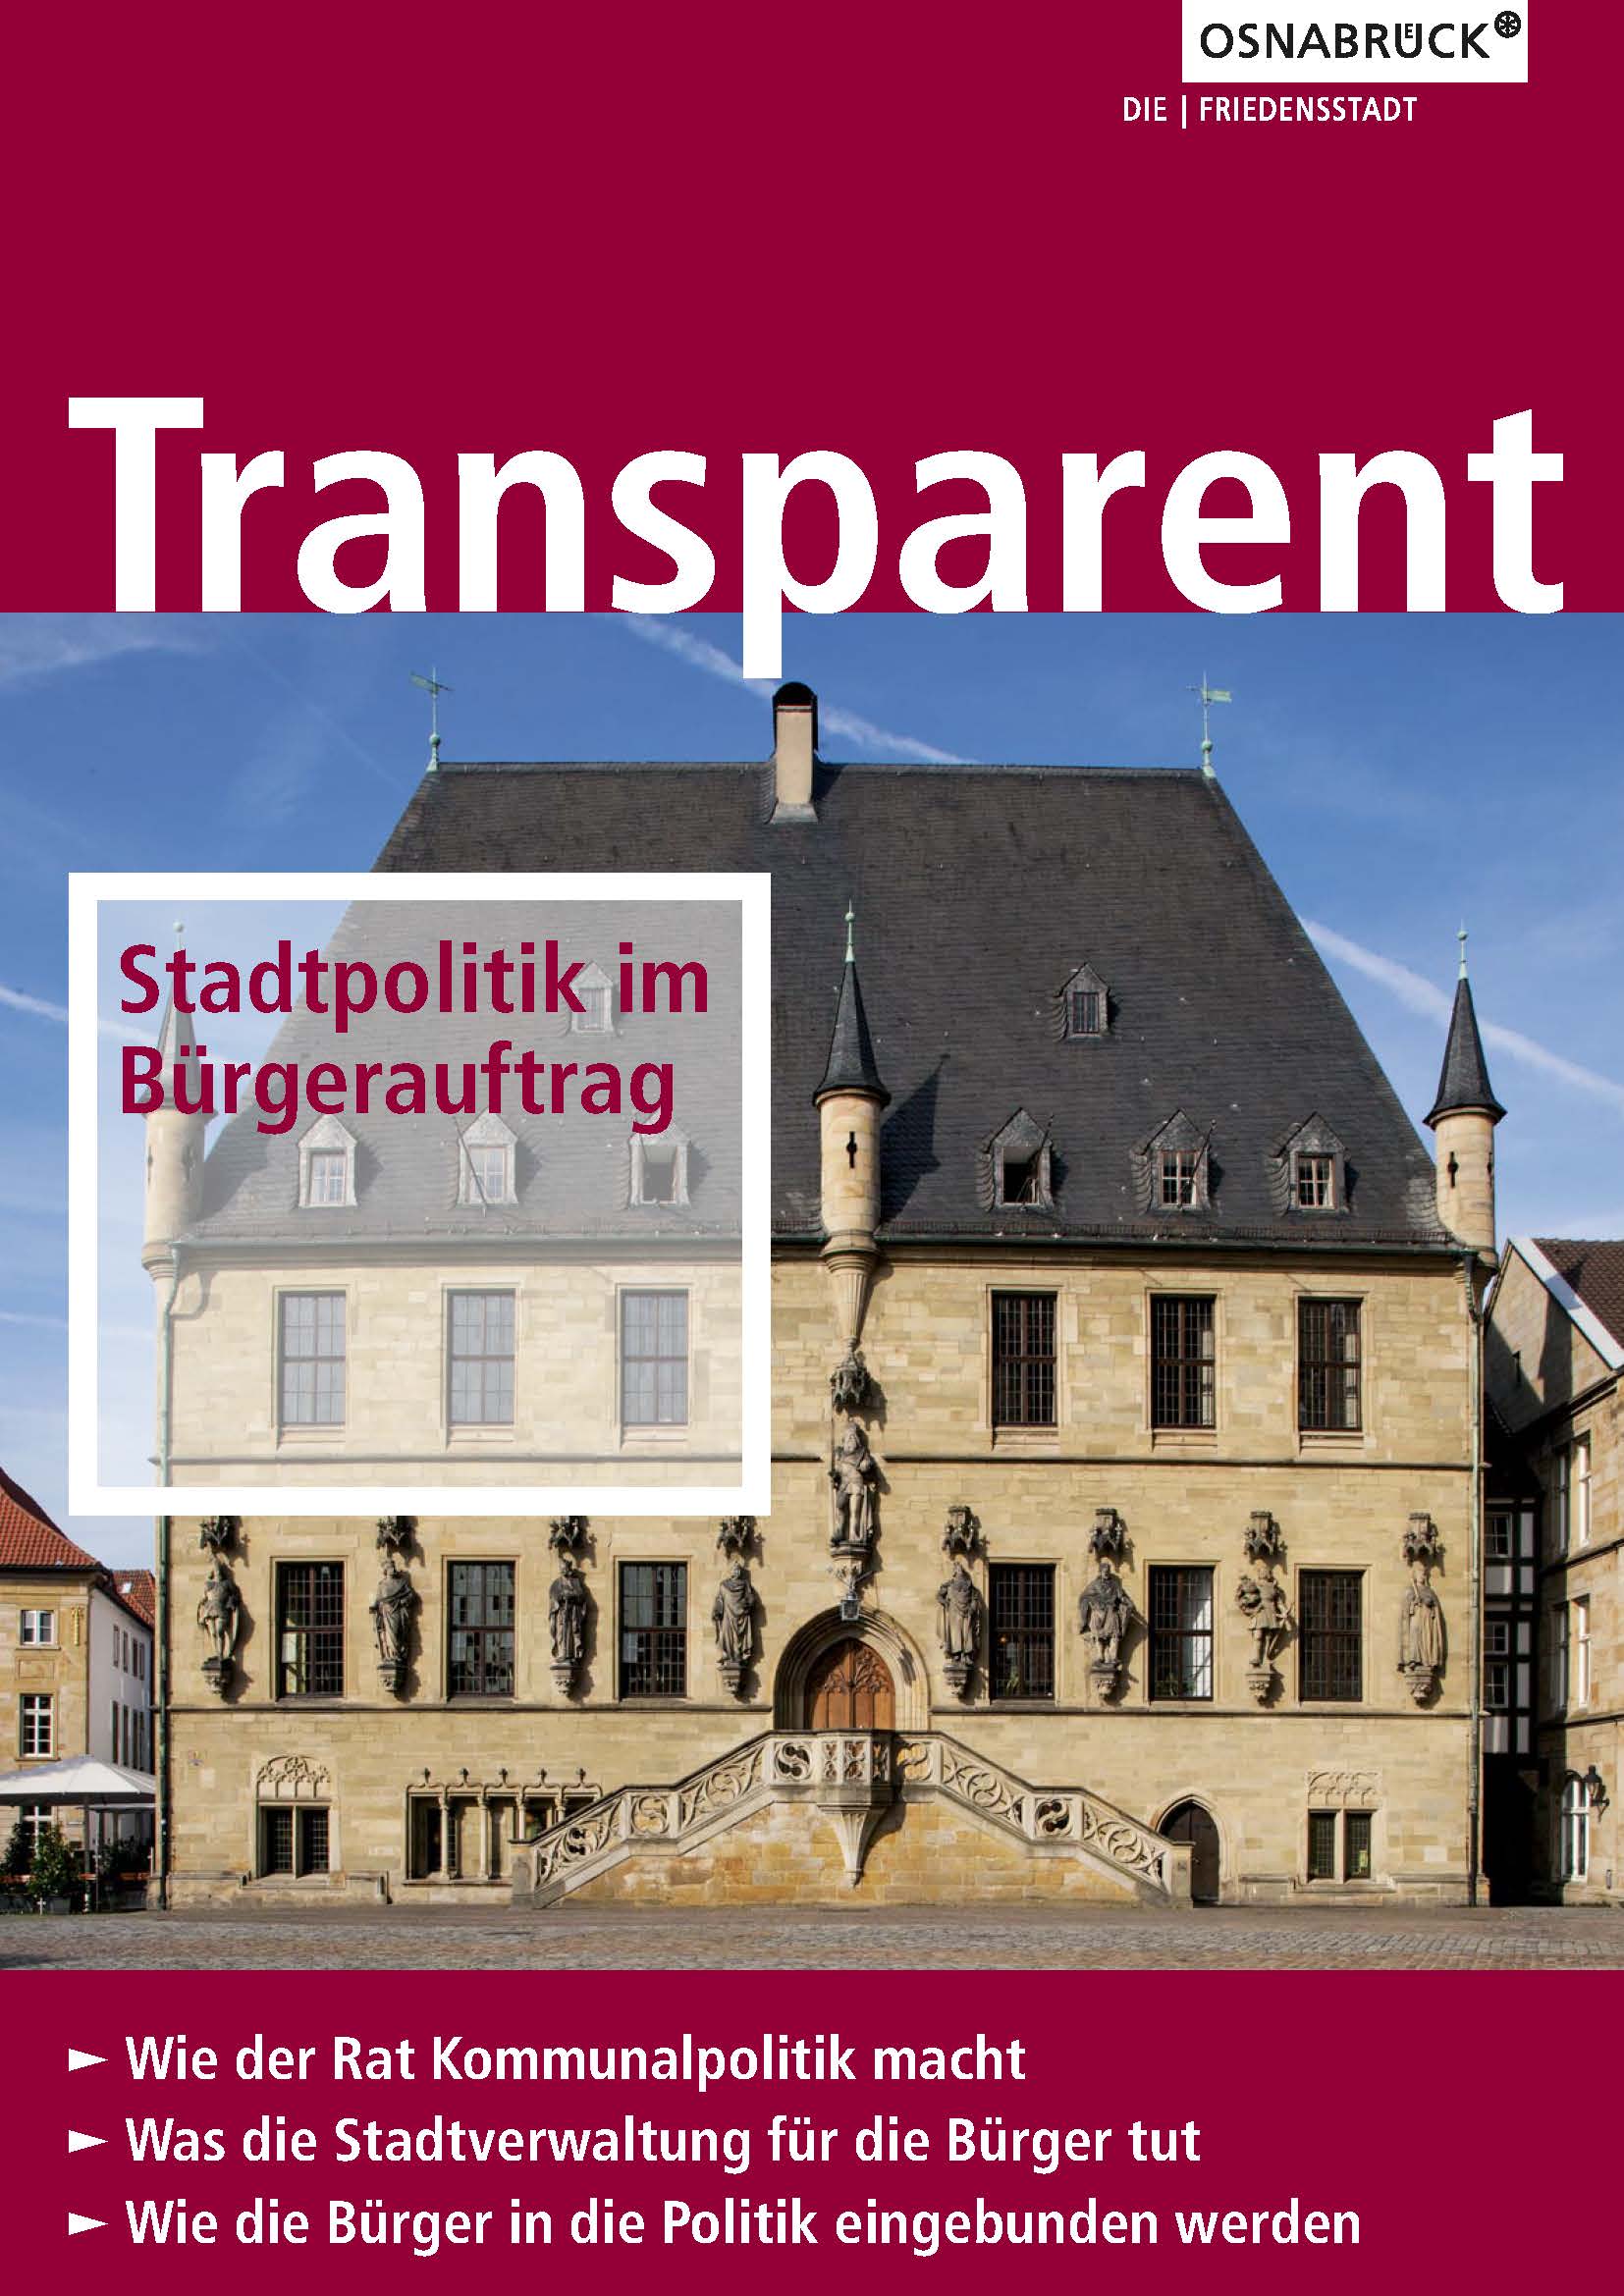 Titelseite der Ratsbroschüre "Transparent"